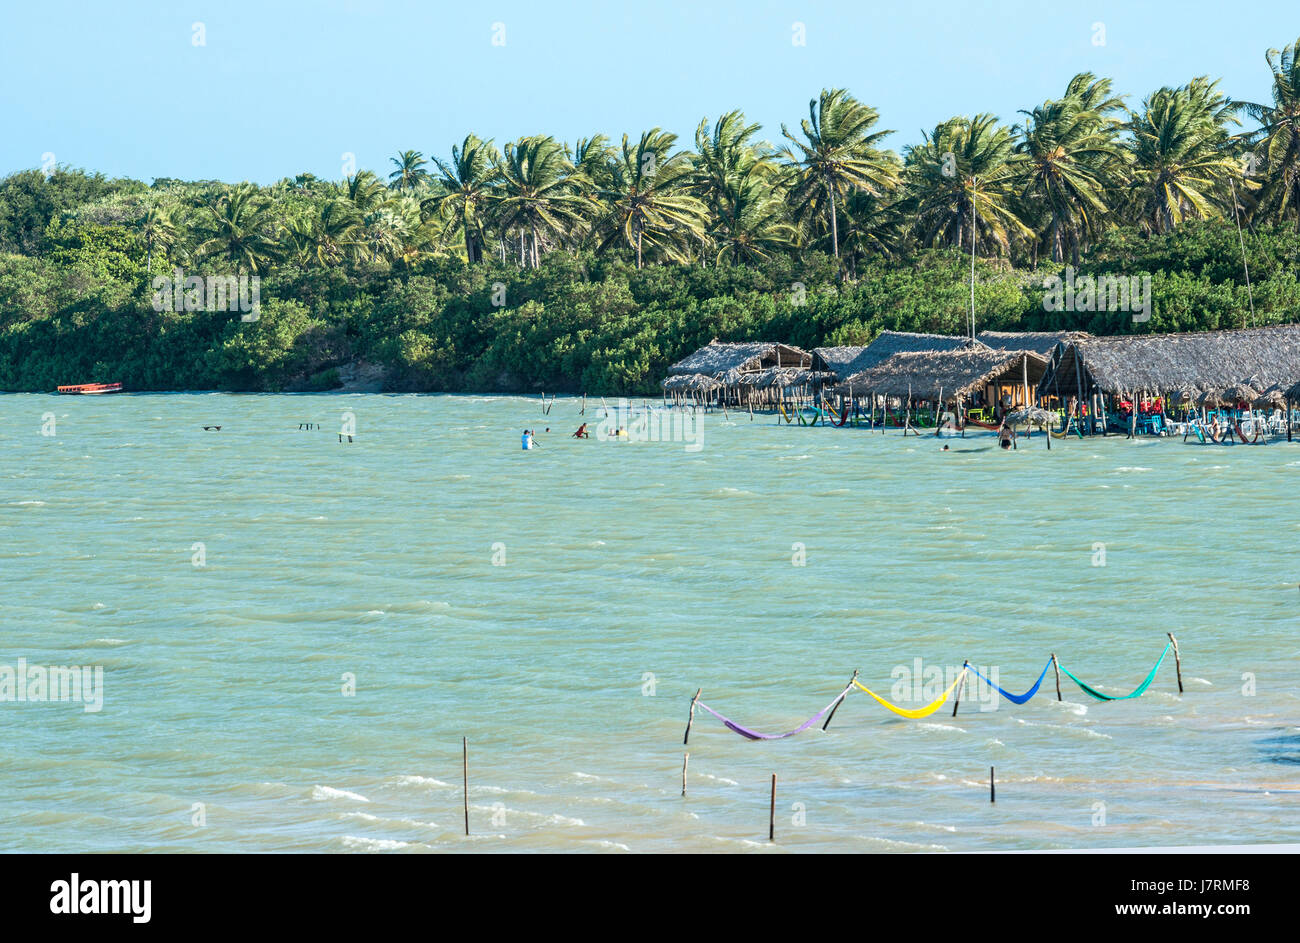 Jericoacoara, Ceara state, Brazil - July 2016: tourists and hammocks are on the beach and Lagoon Tatajuba from above Stock Photo